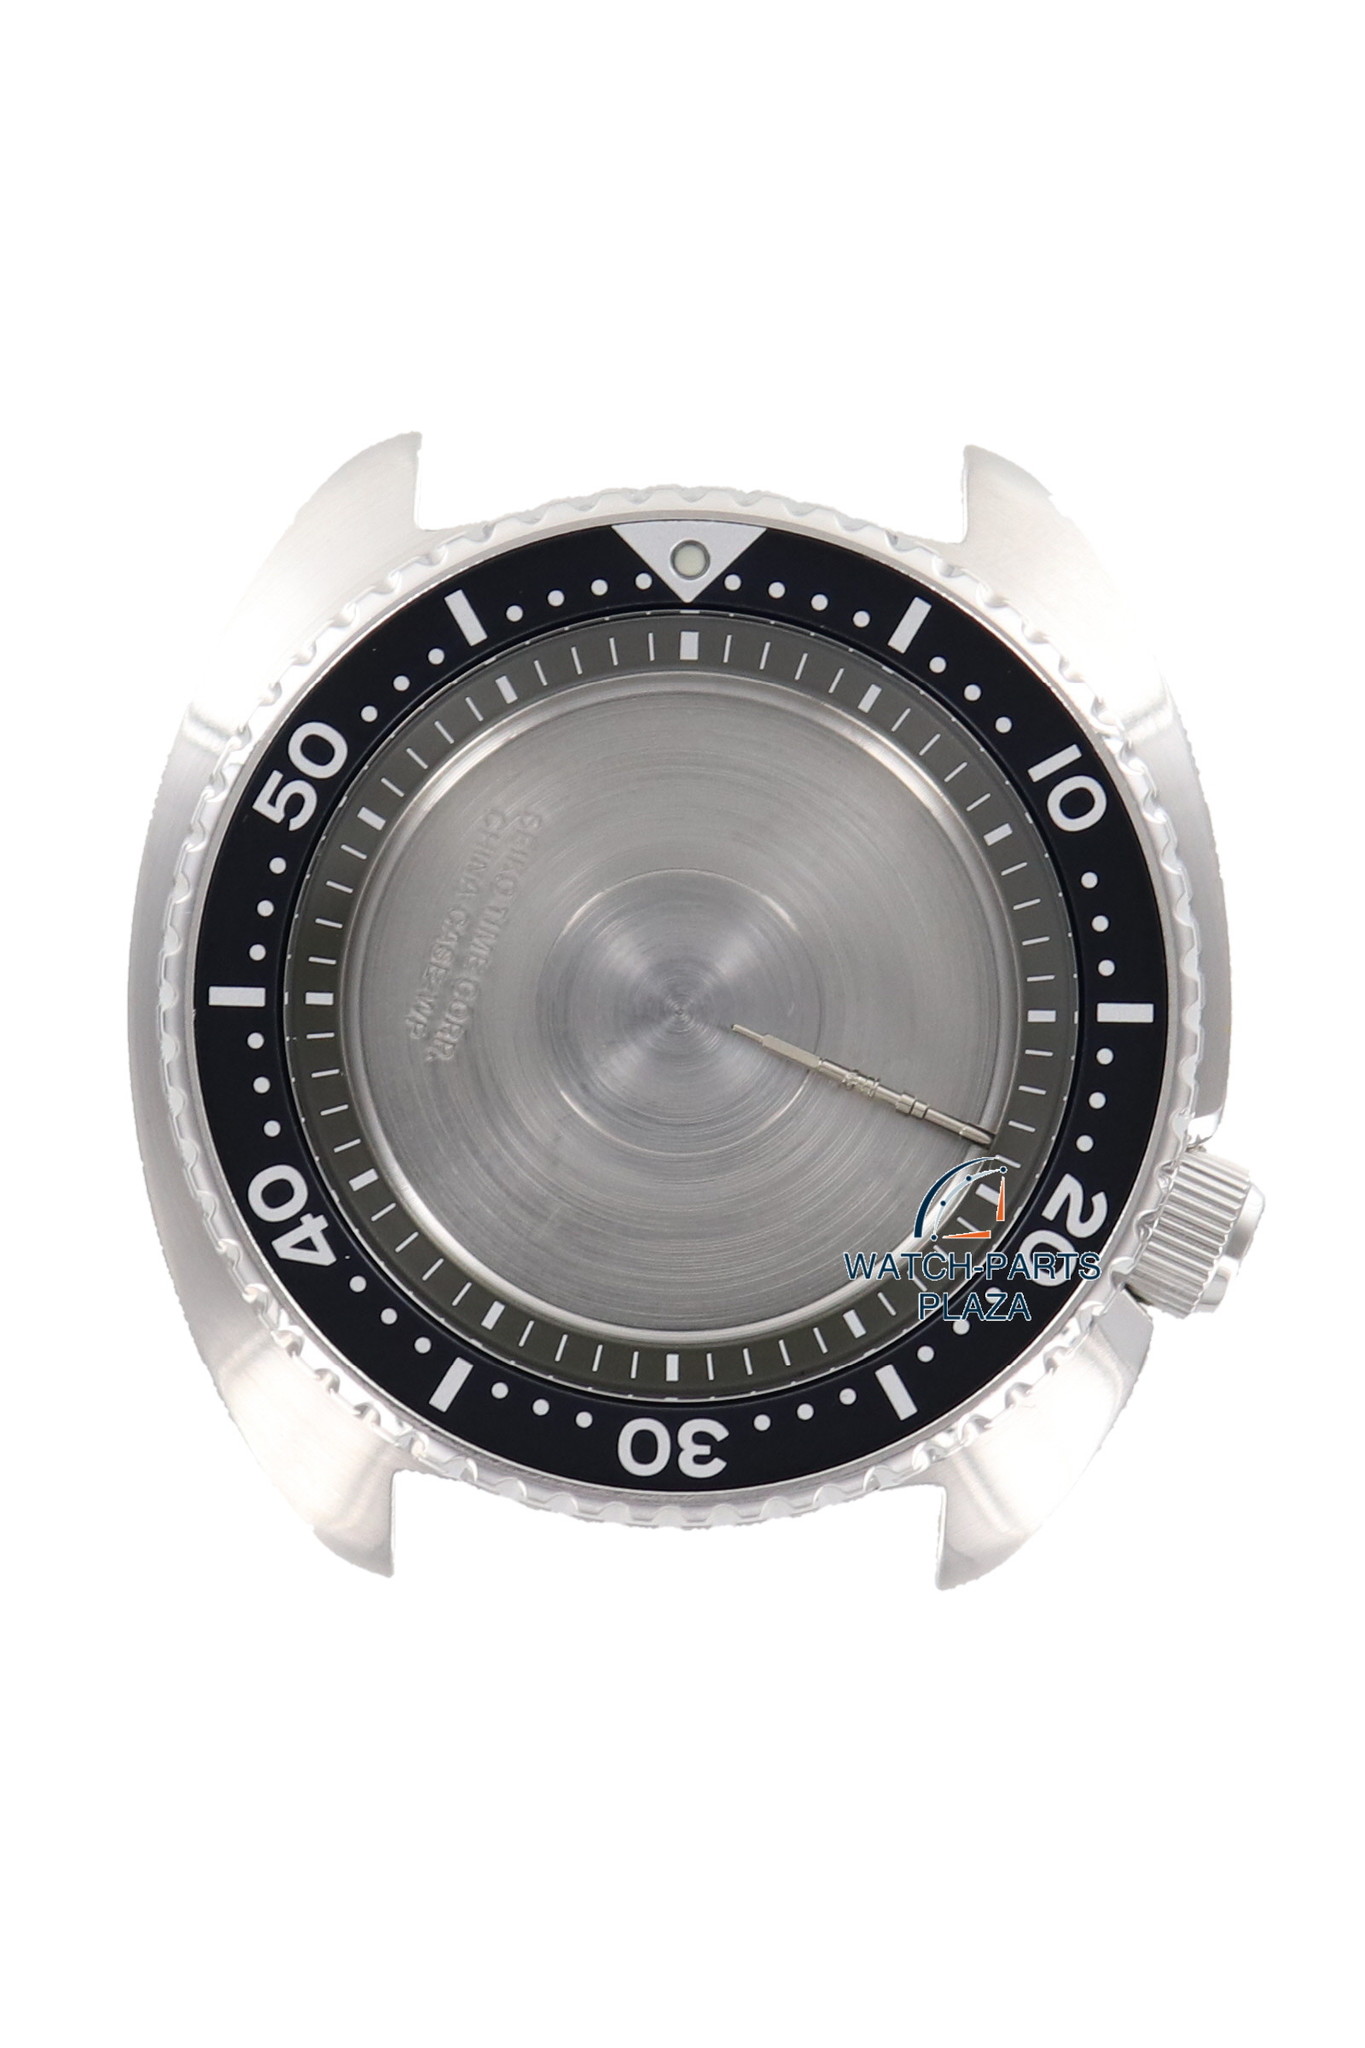 Seiko SRPC23K1 / SRP777 Black Turtle watch case 4R36-04Y0 - WatchPlaza